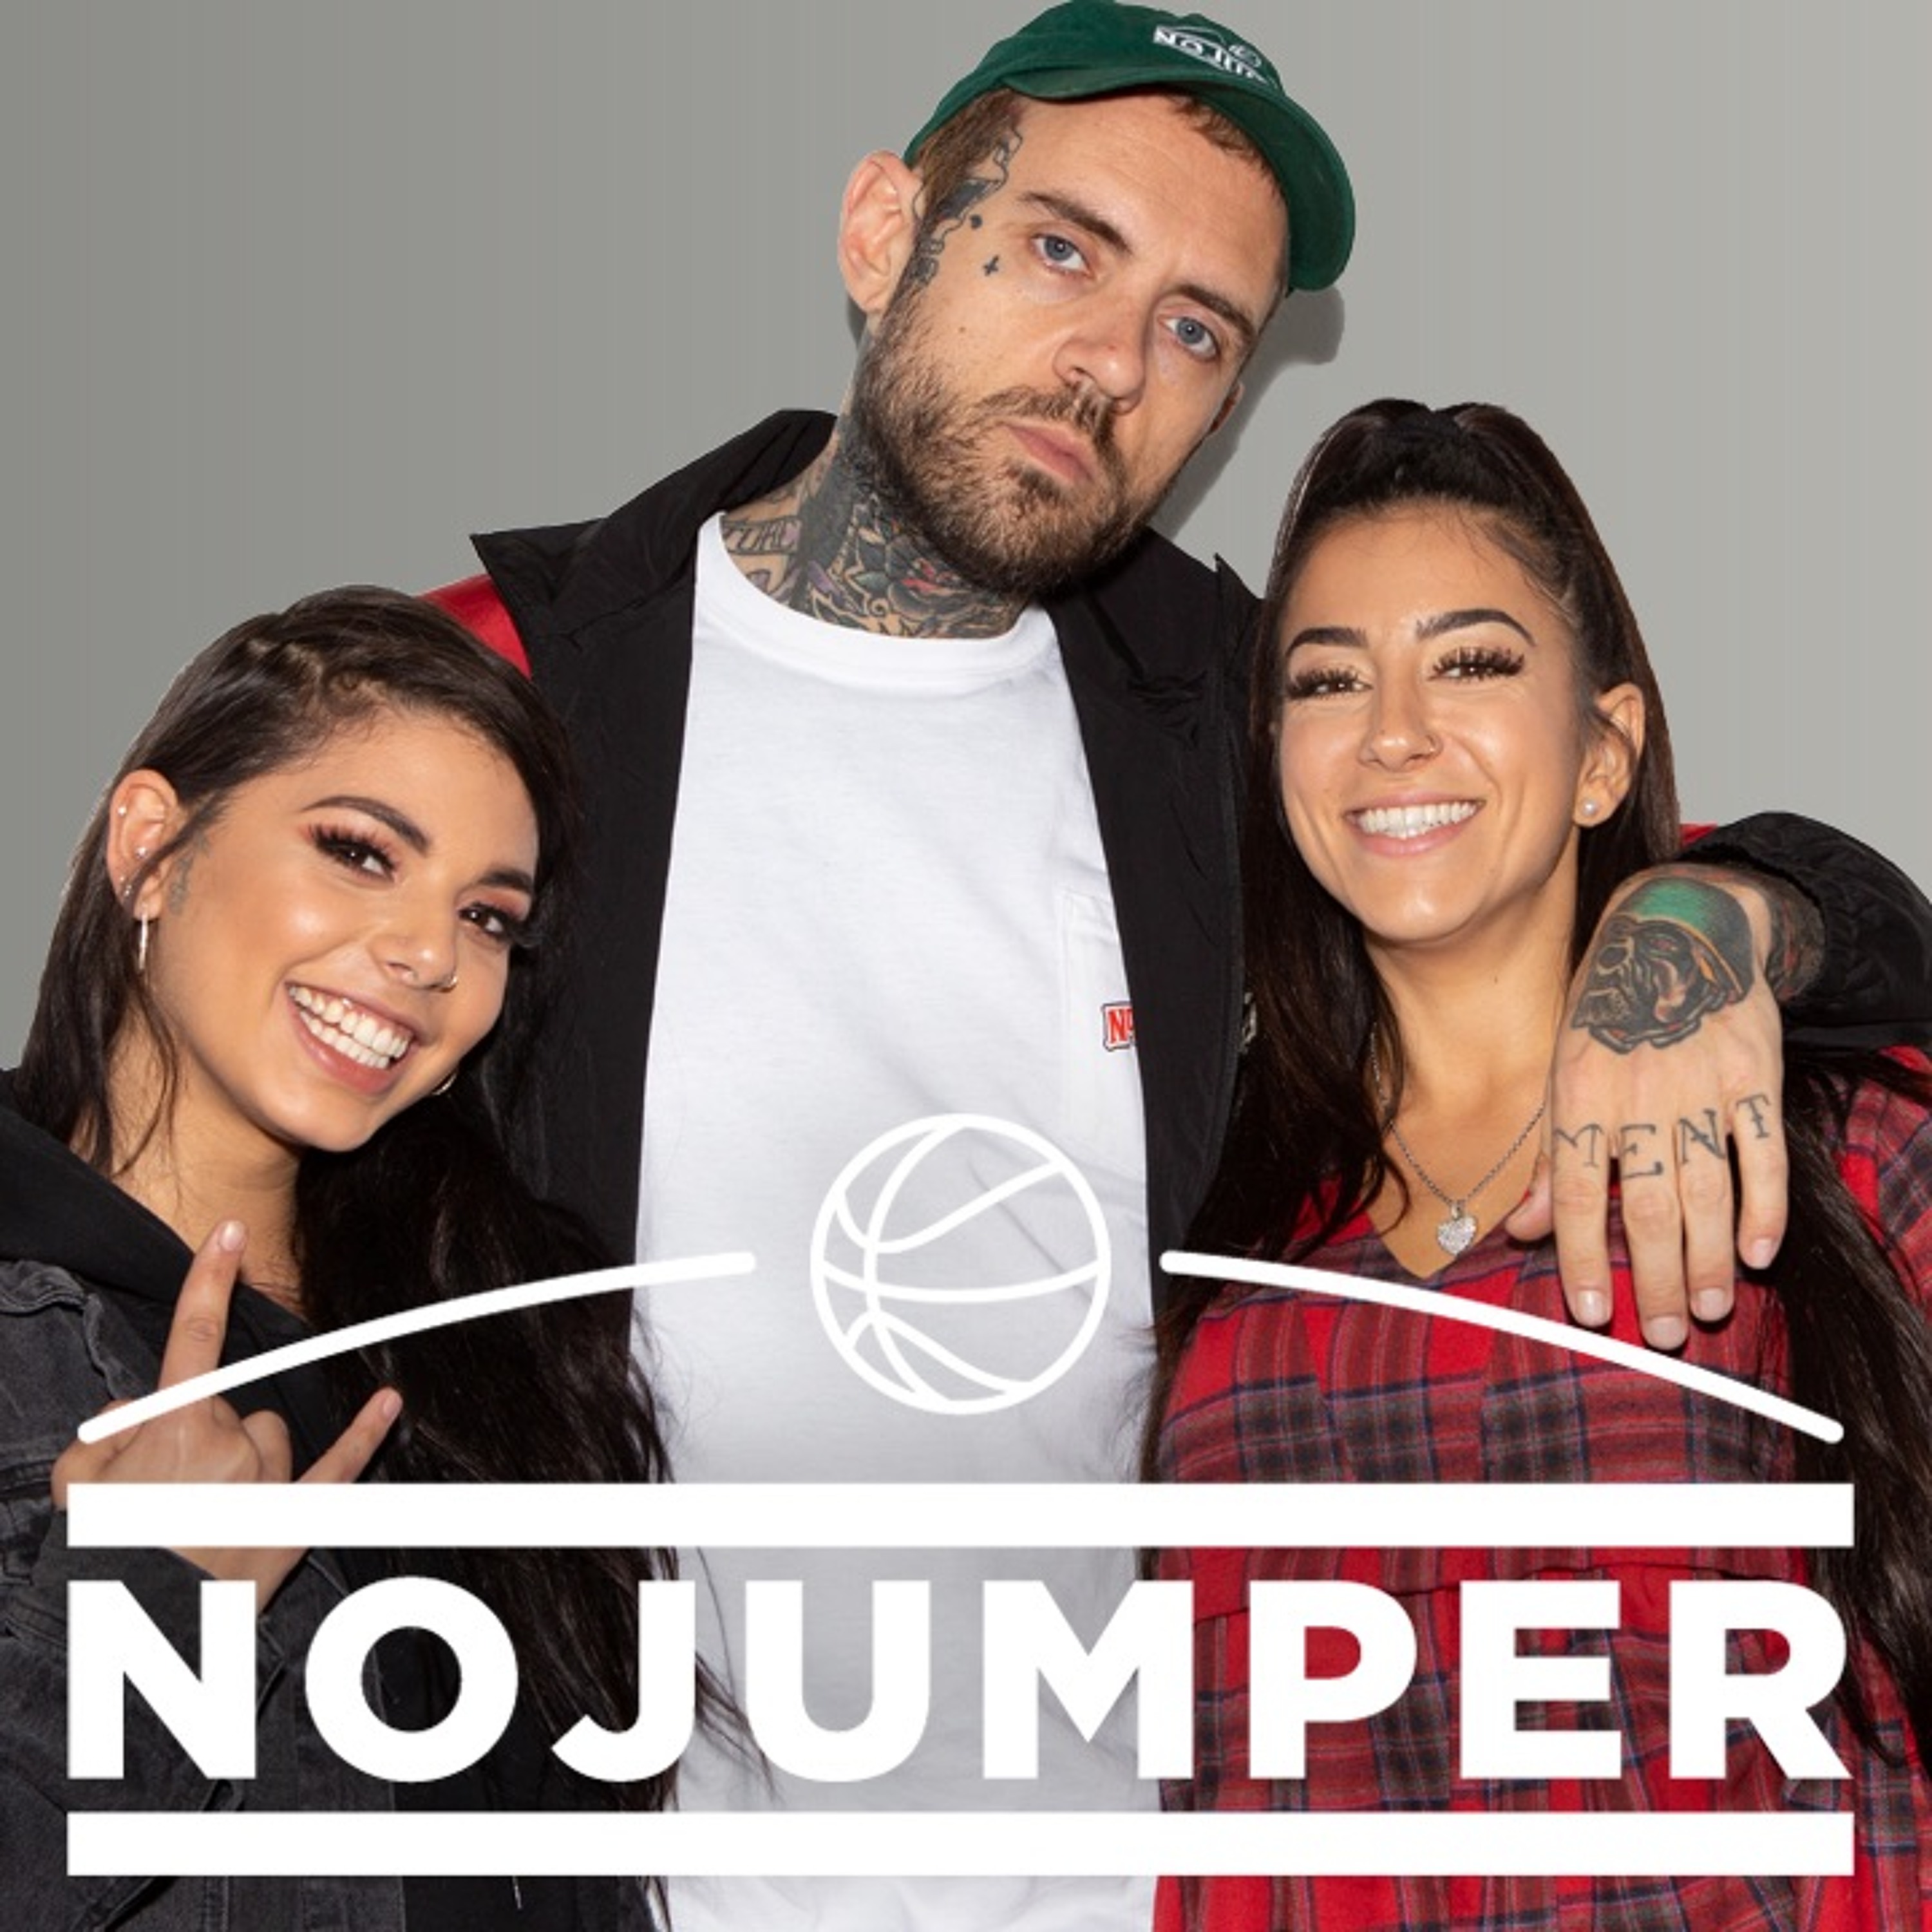 No jumper interview porn star